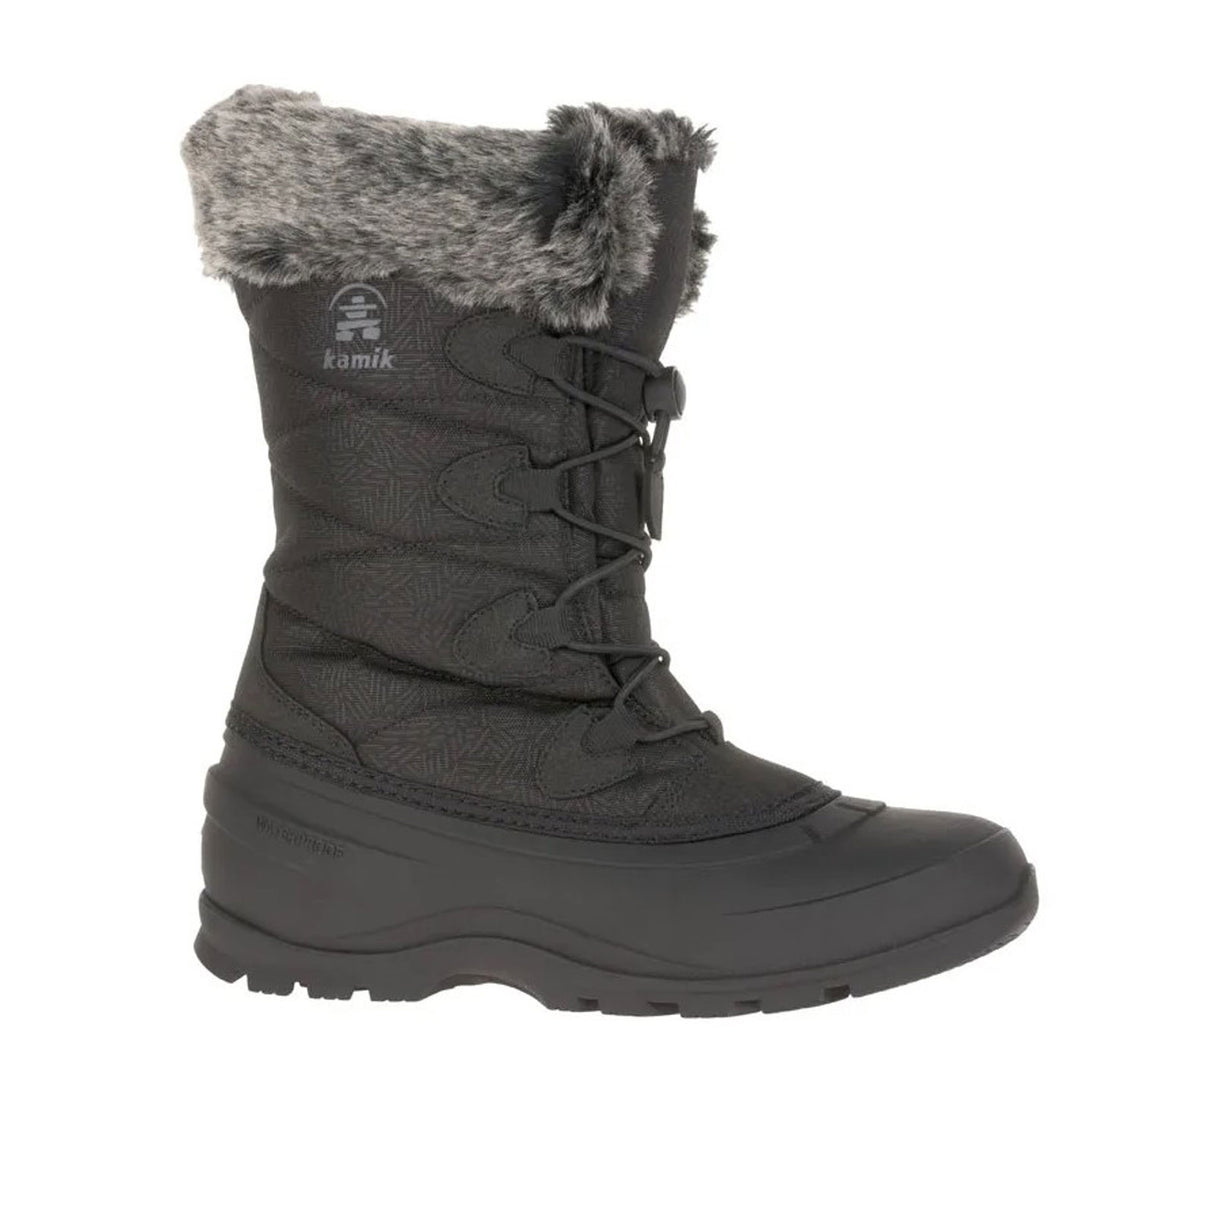 Kamik Momentum 3 Mid Winter Boot (Women) - Black Boots - Winter - High - The Heel Shoe Fitters